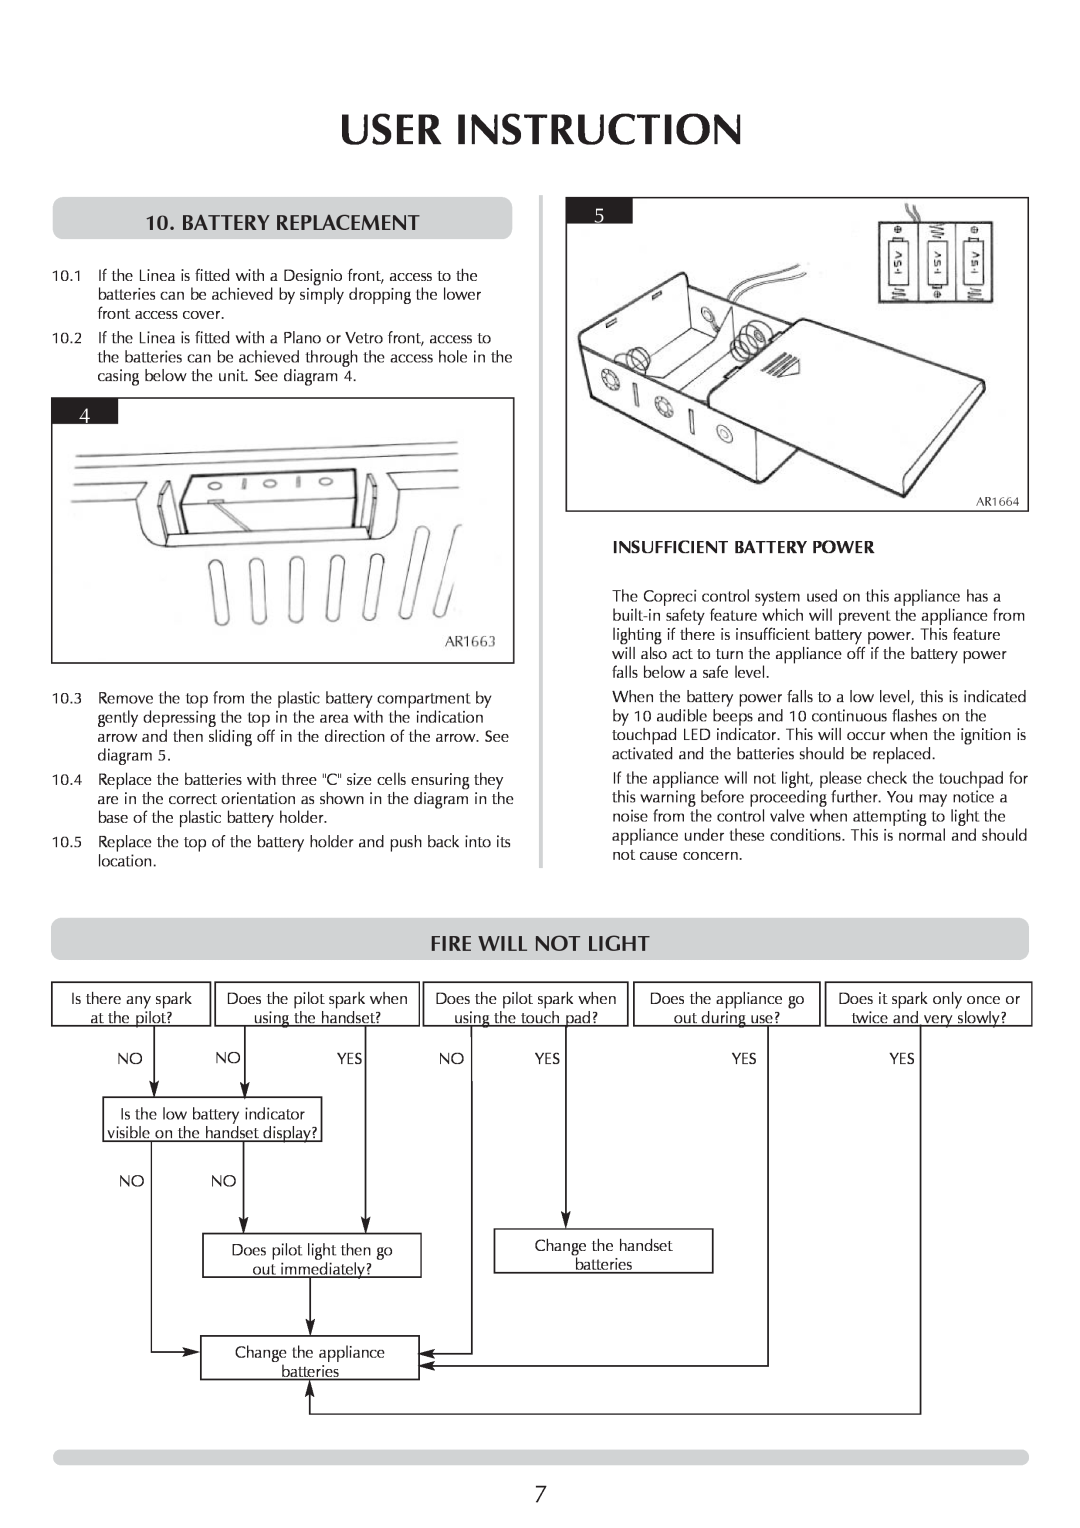 Stovax GAZCO Linea Balanced Flue Convector Fire manual Battery Replacement, Fire Will Not Light, User Instruction 